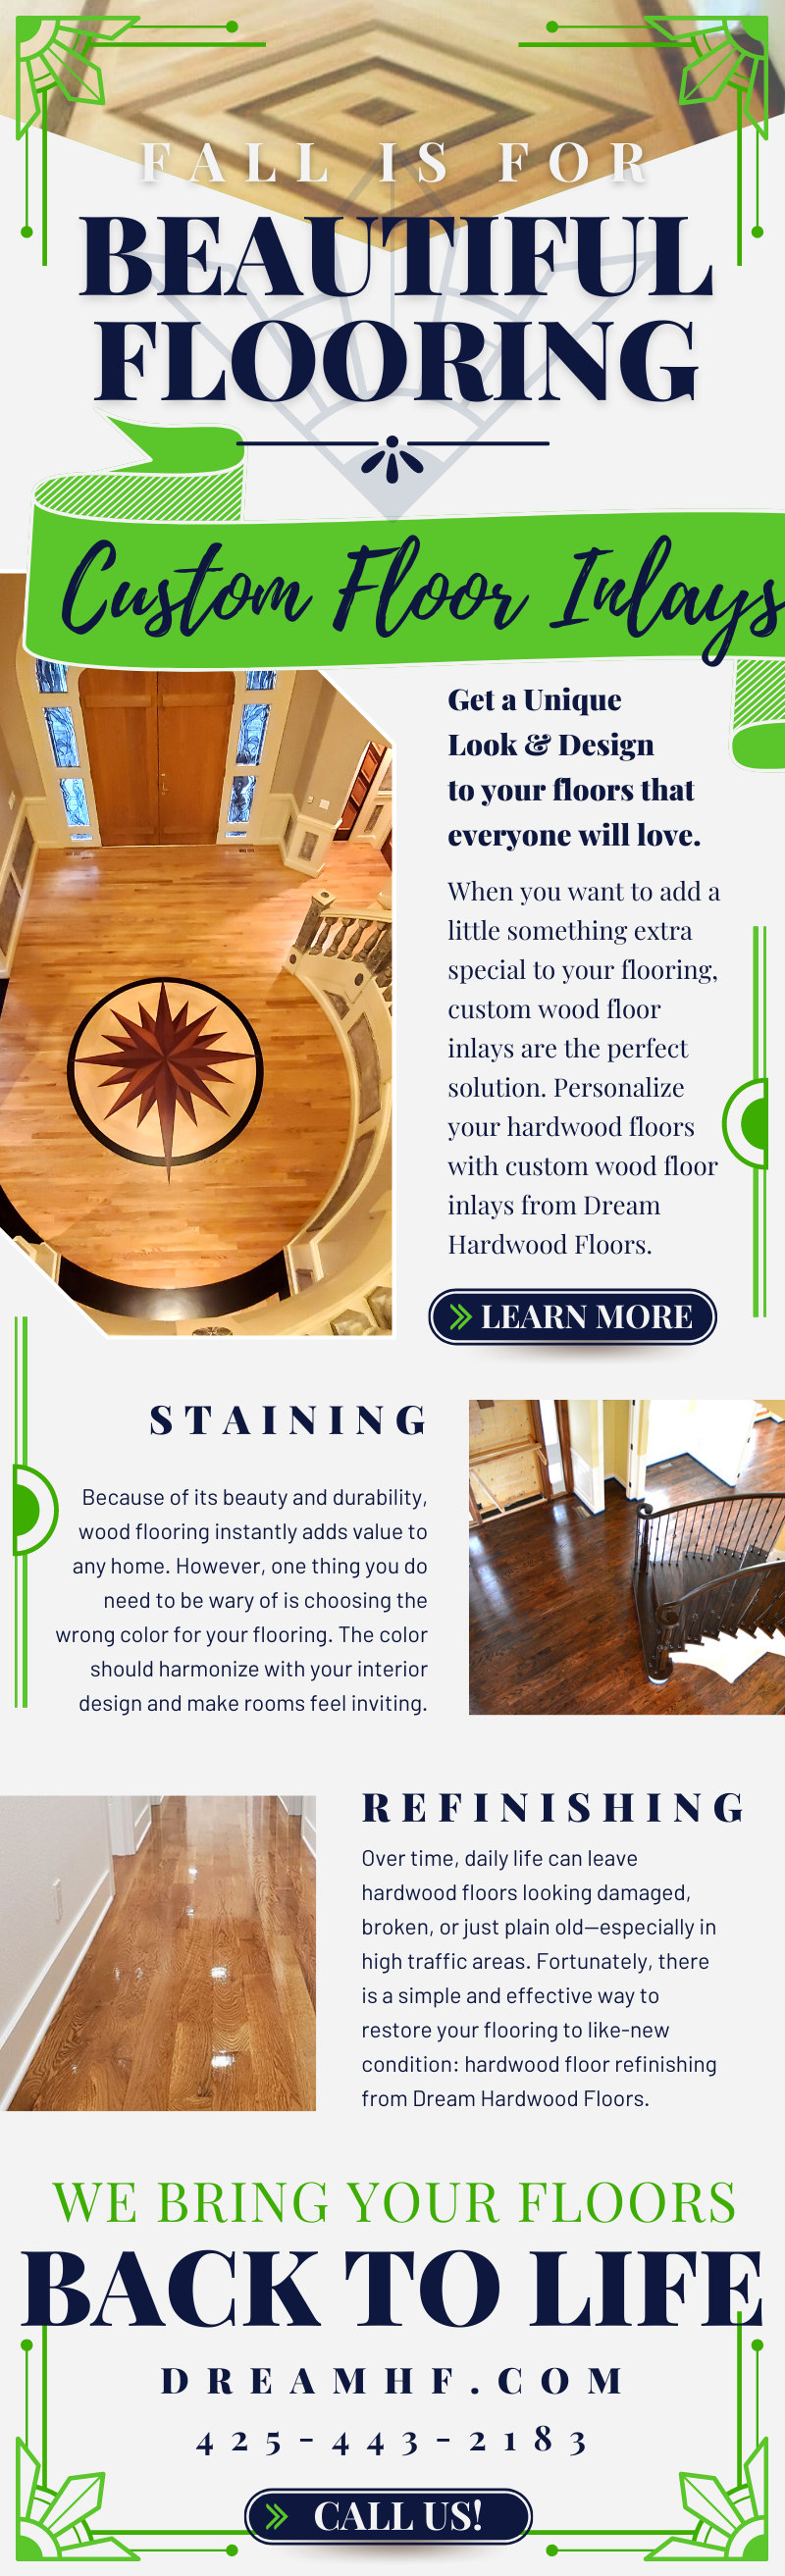 Dream Hardwood Floors Infographic